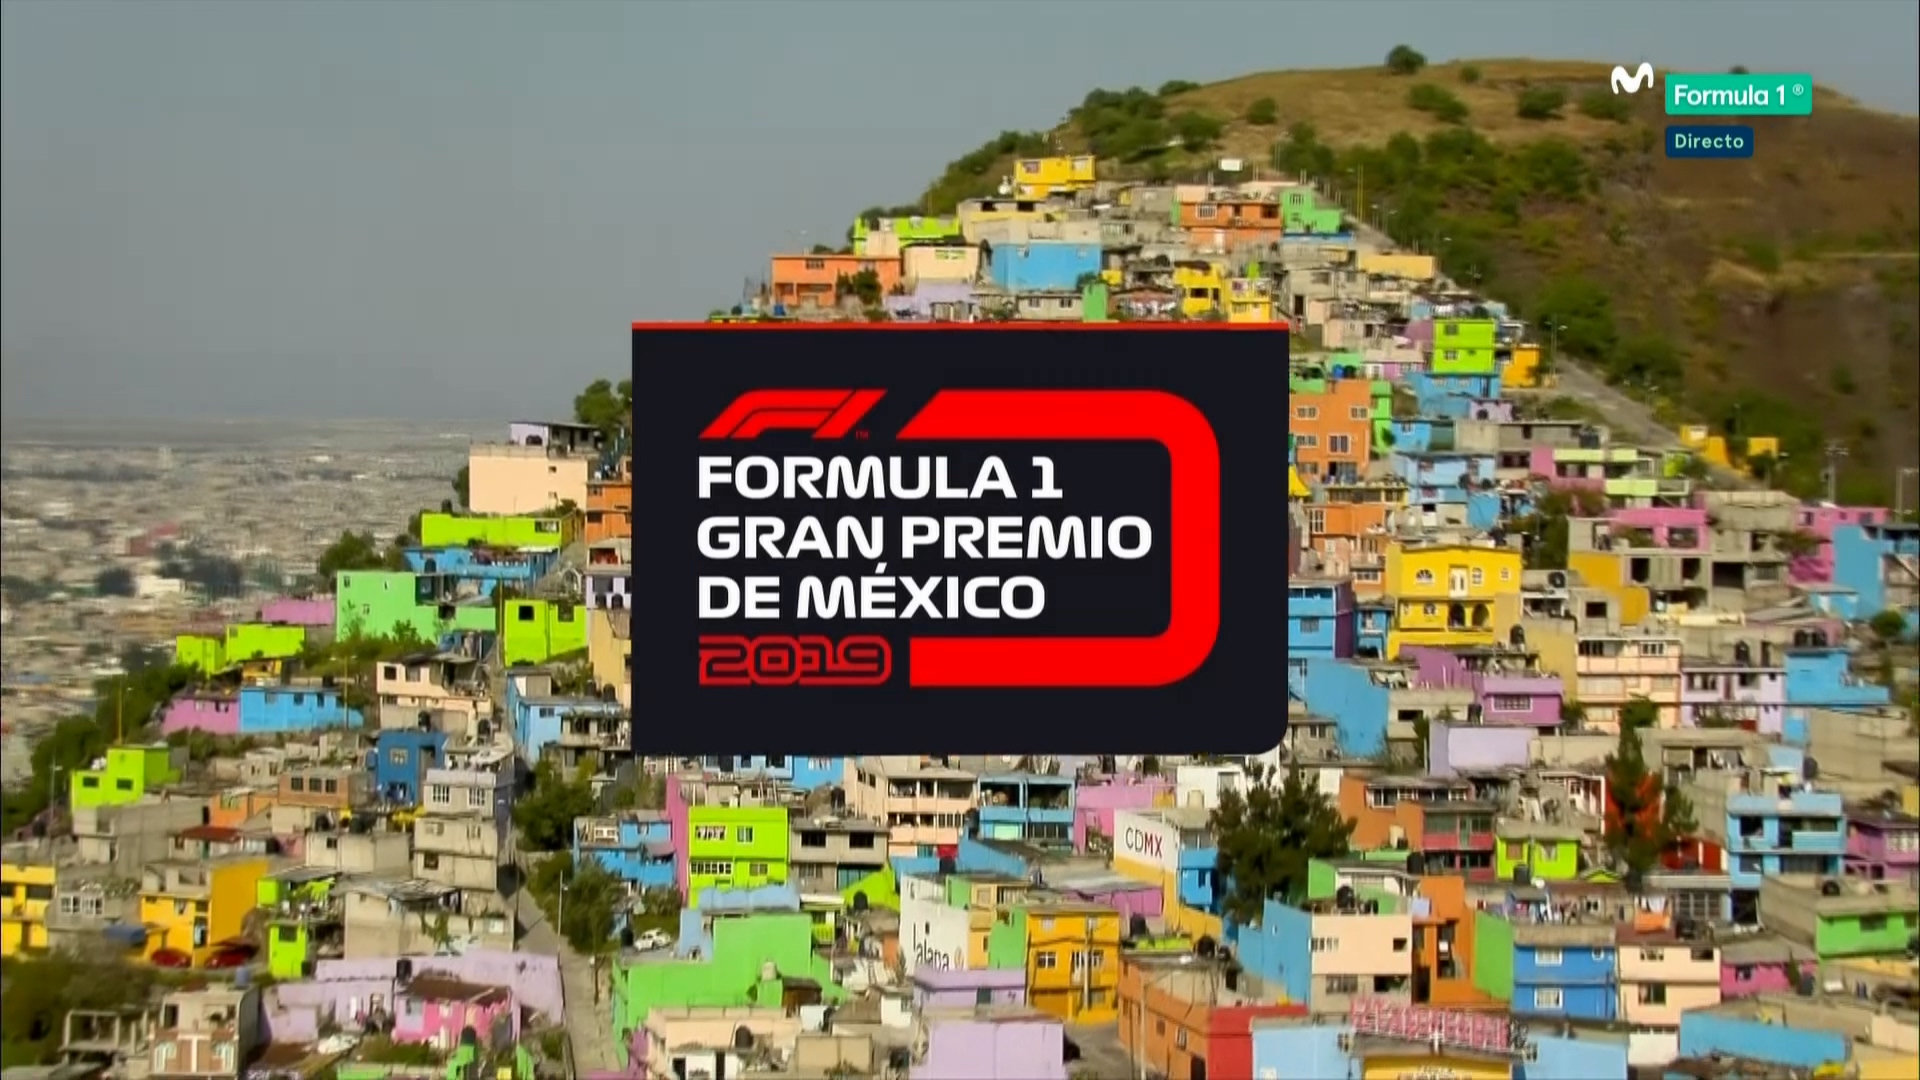 2016 mexican grand prix download free